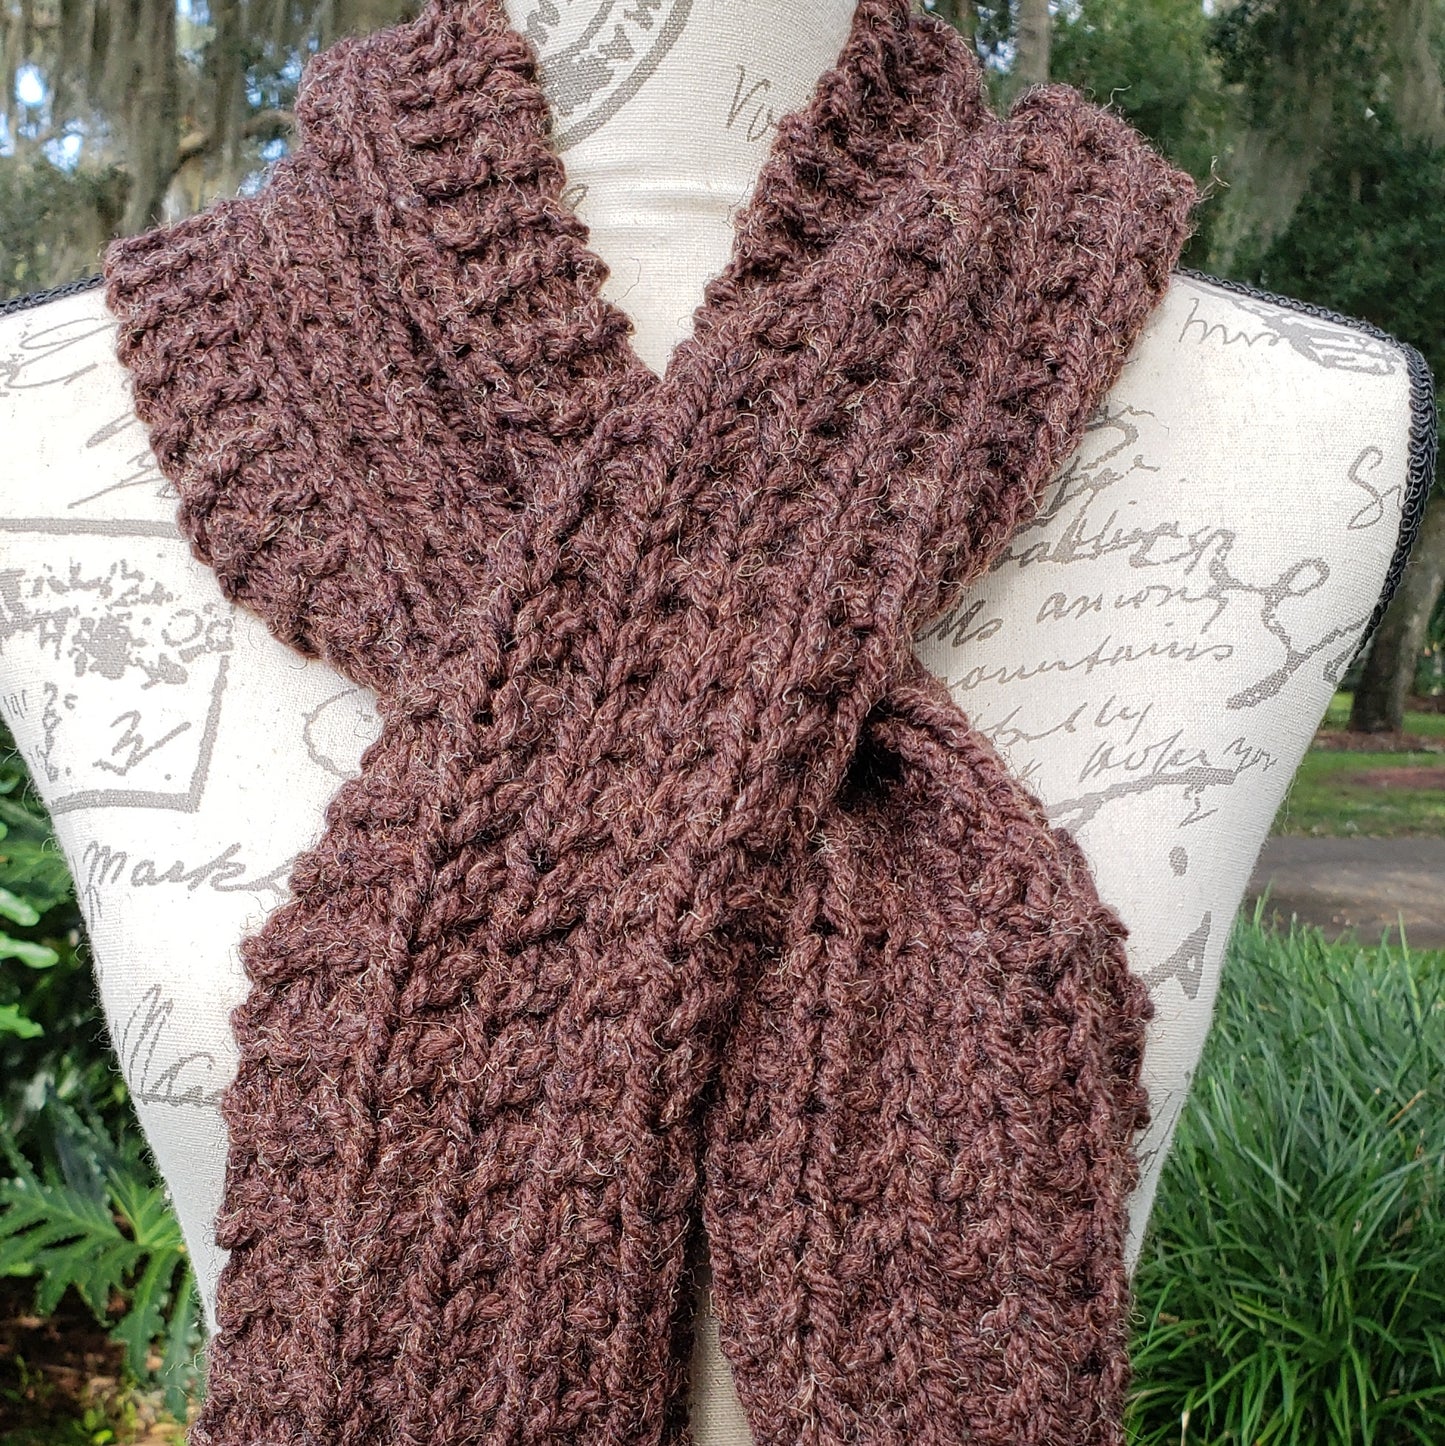 Rustic crochet scarf